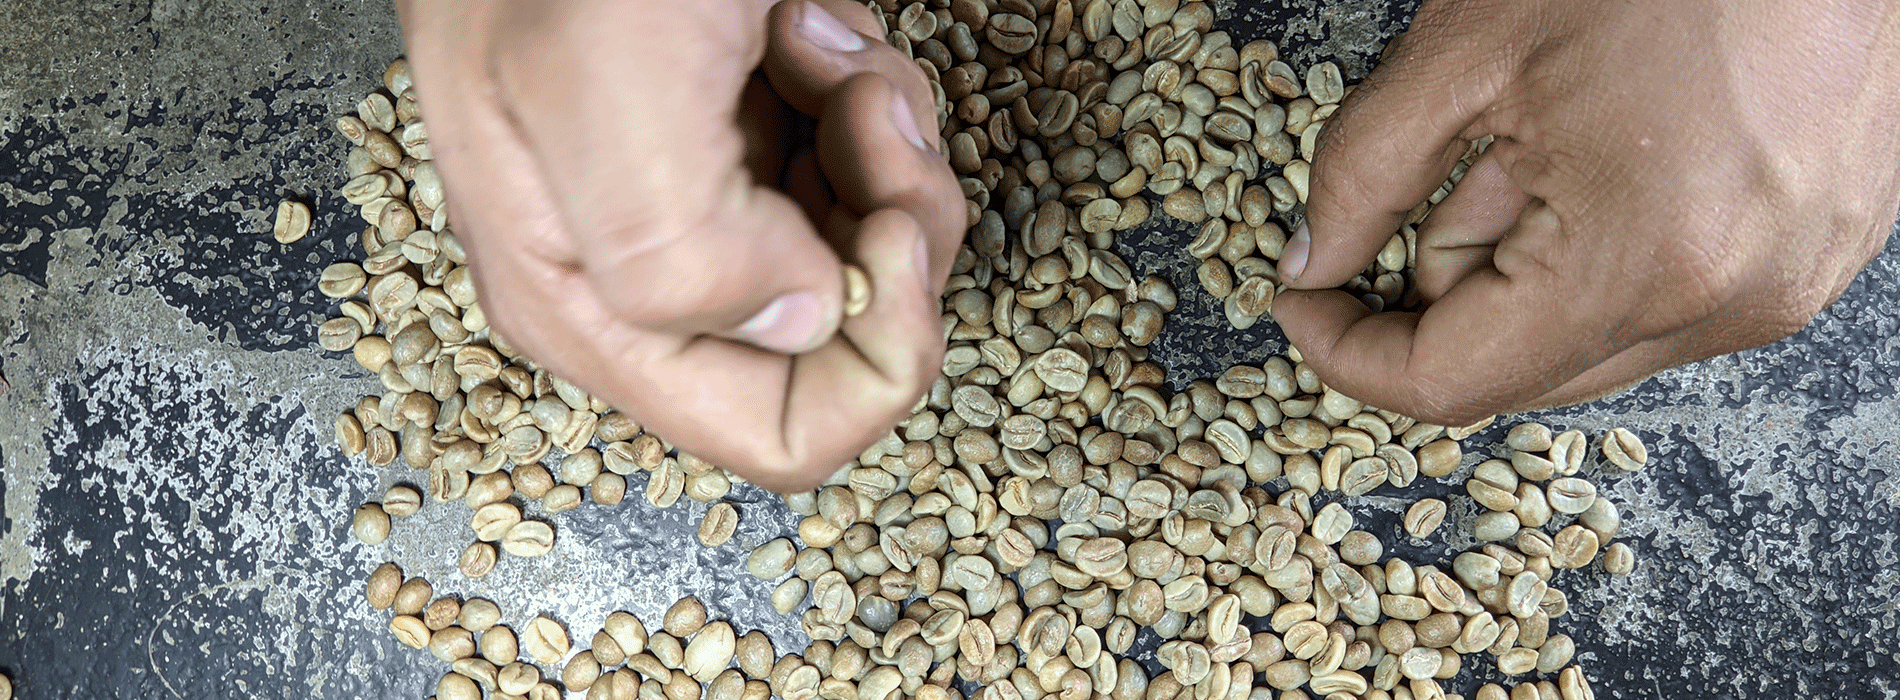 Empresa de café de Santuario, Risaralda, va a la conquista de consumidores ingleses